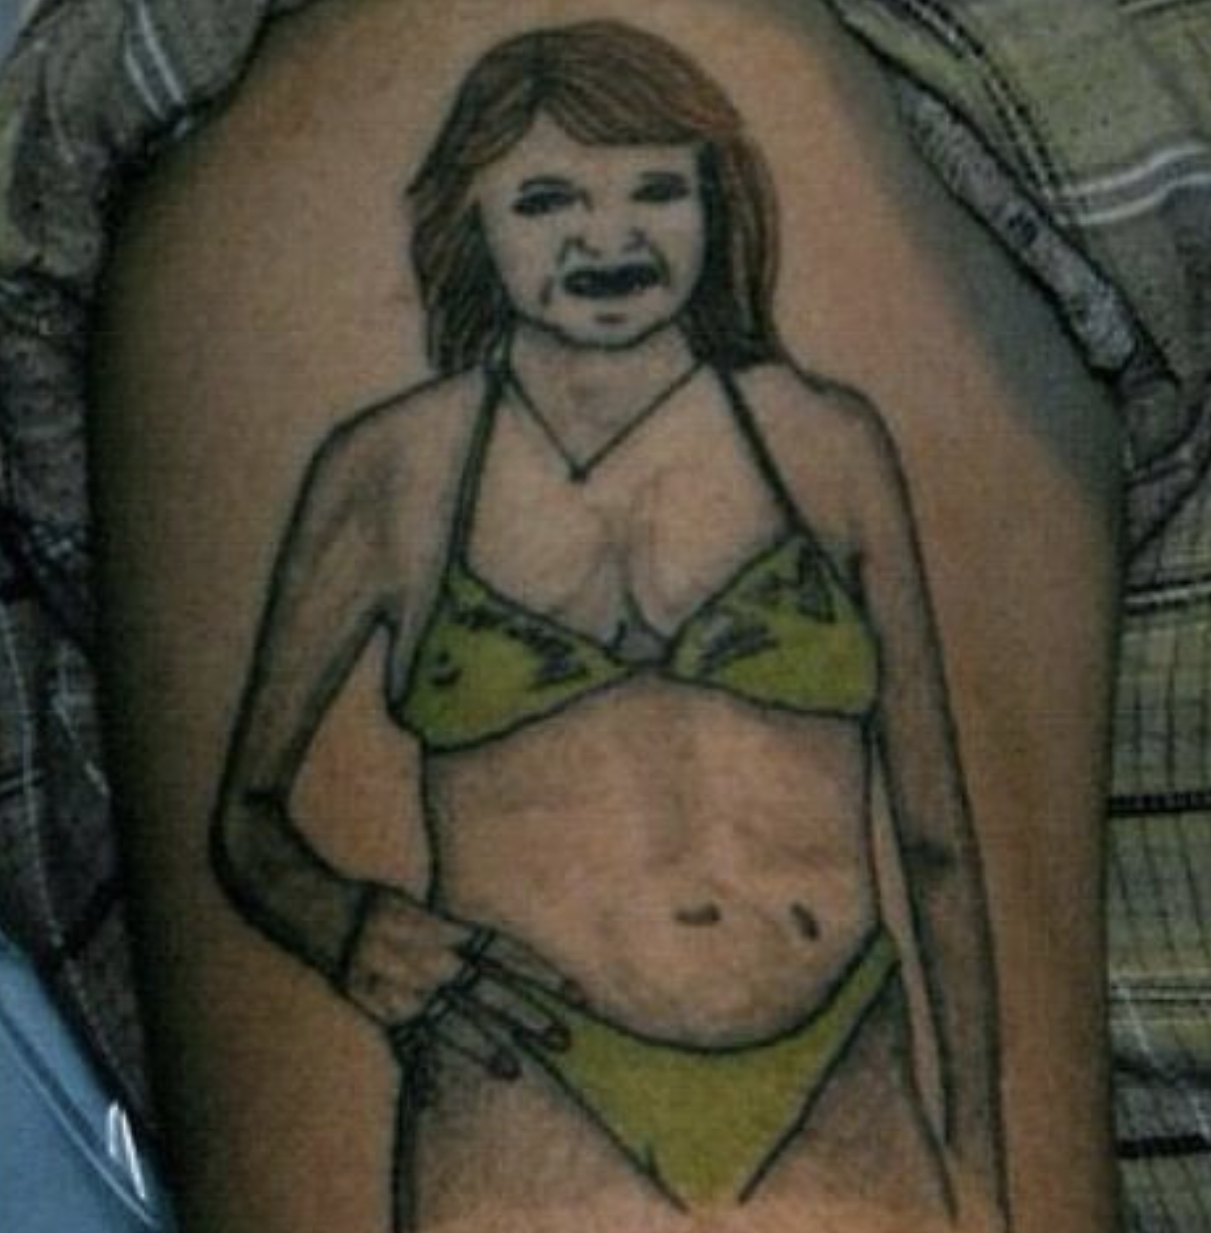 Bad Tattoos - worst tattoos ever